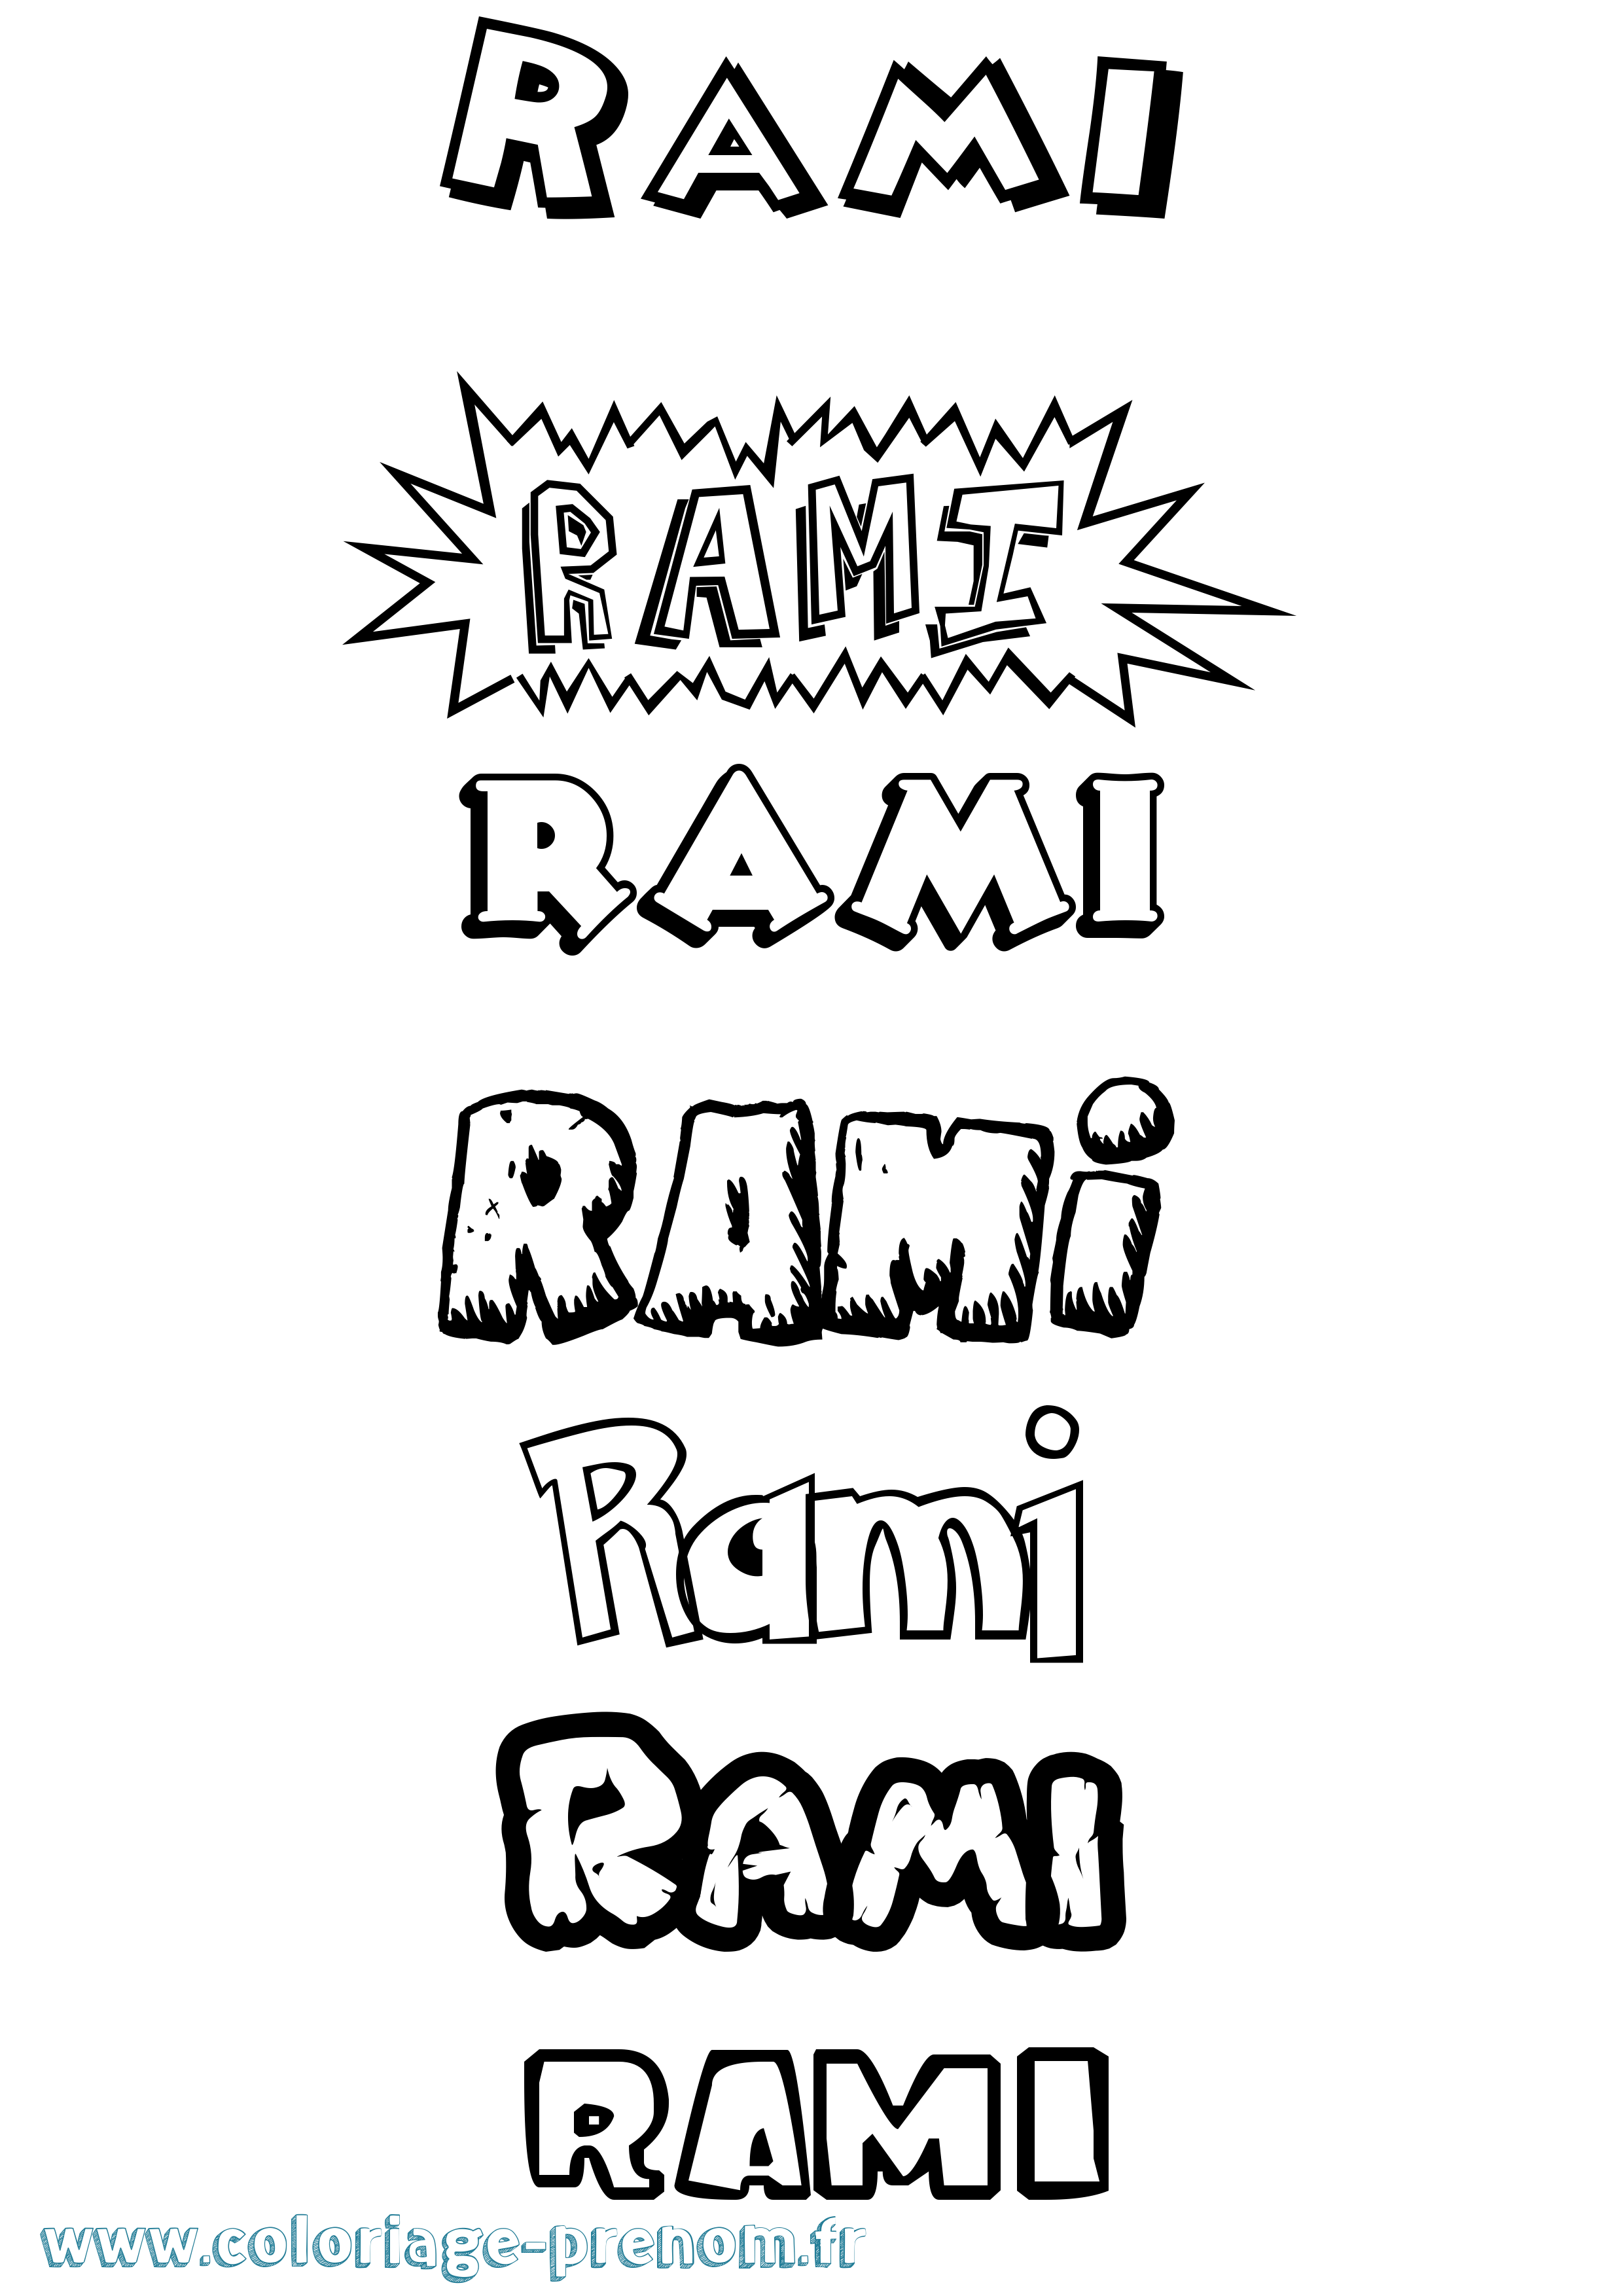 Coloriage prénom Rami